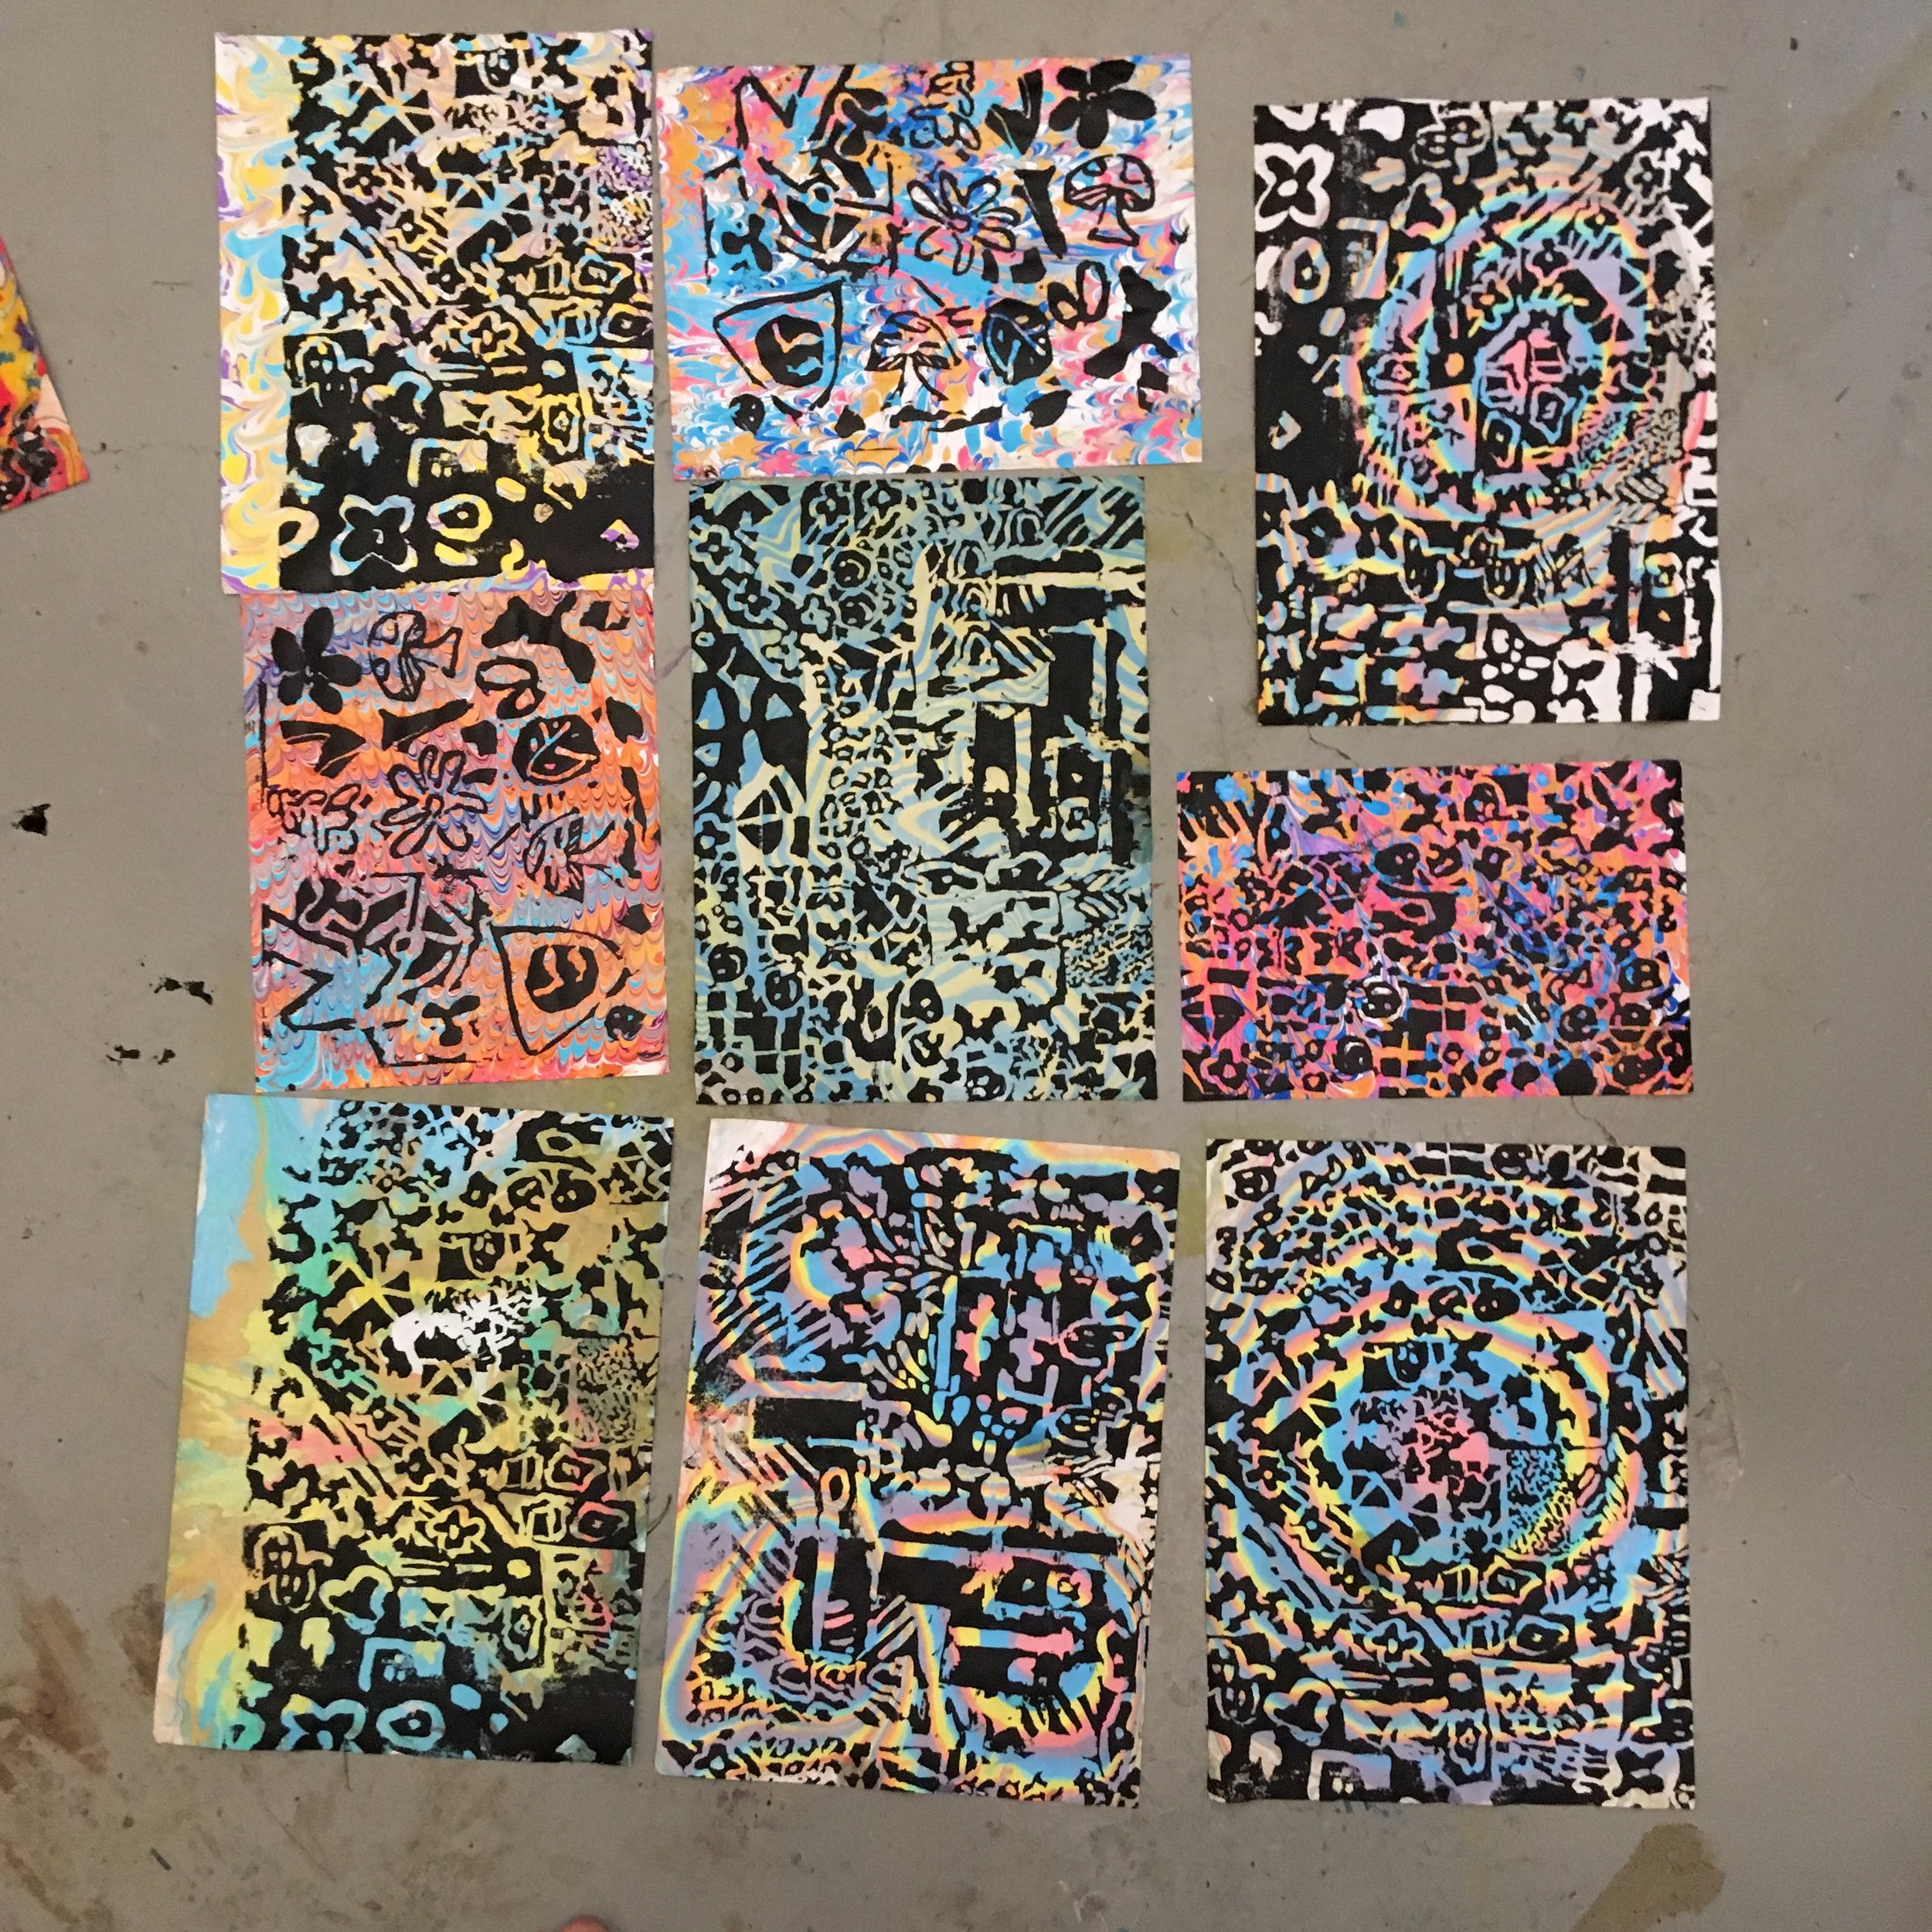 2018, screenprints on marbled monoprints